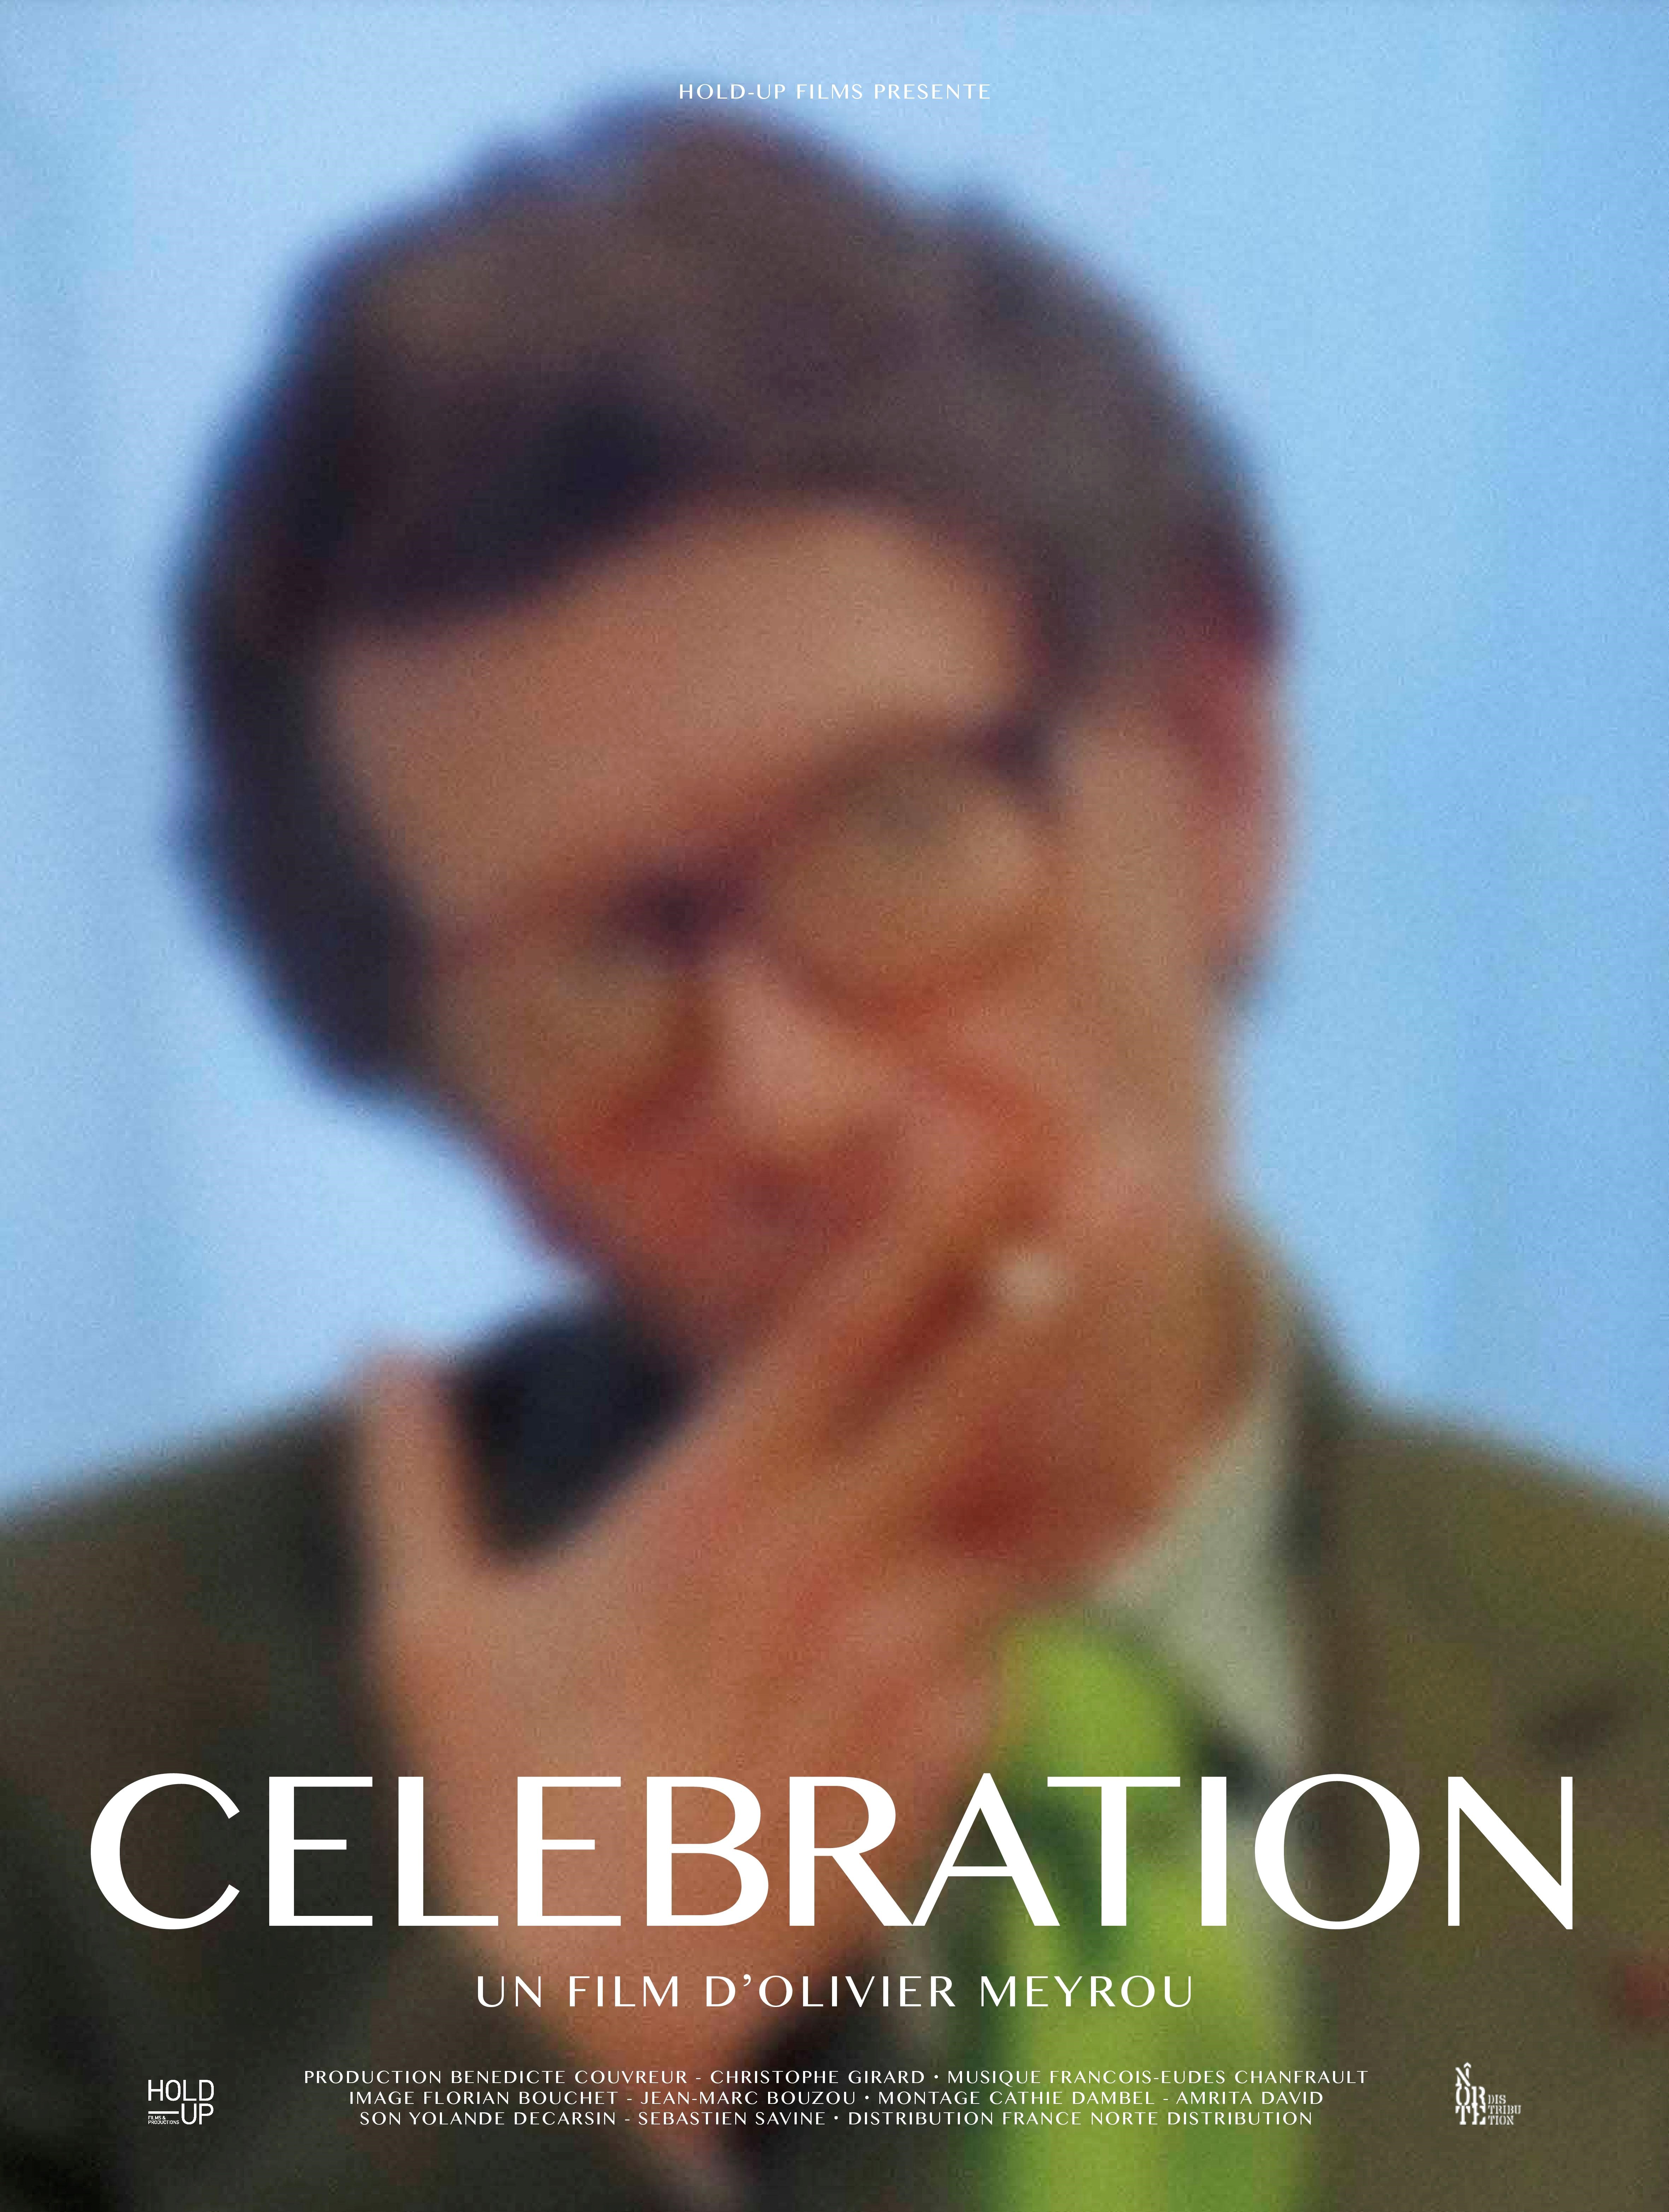 celebrations